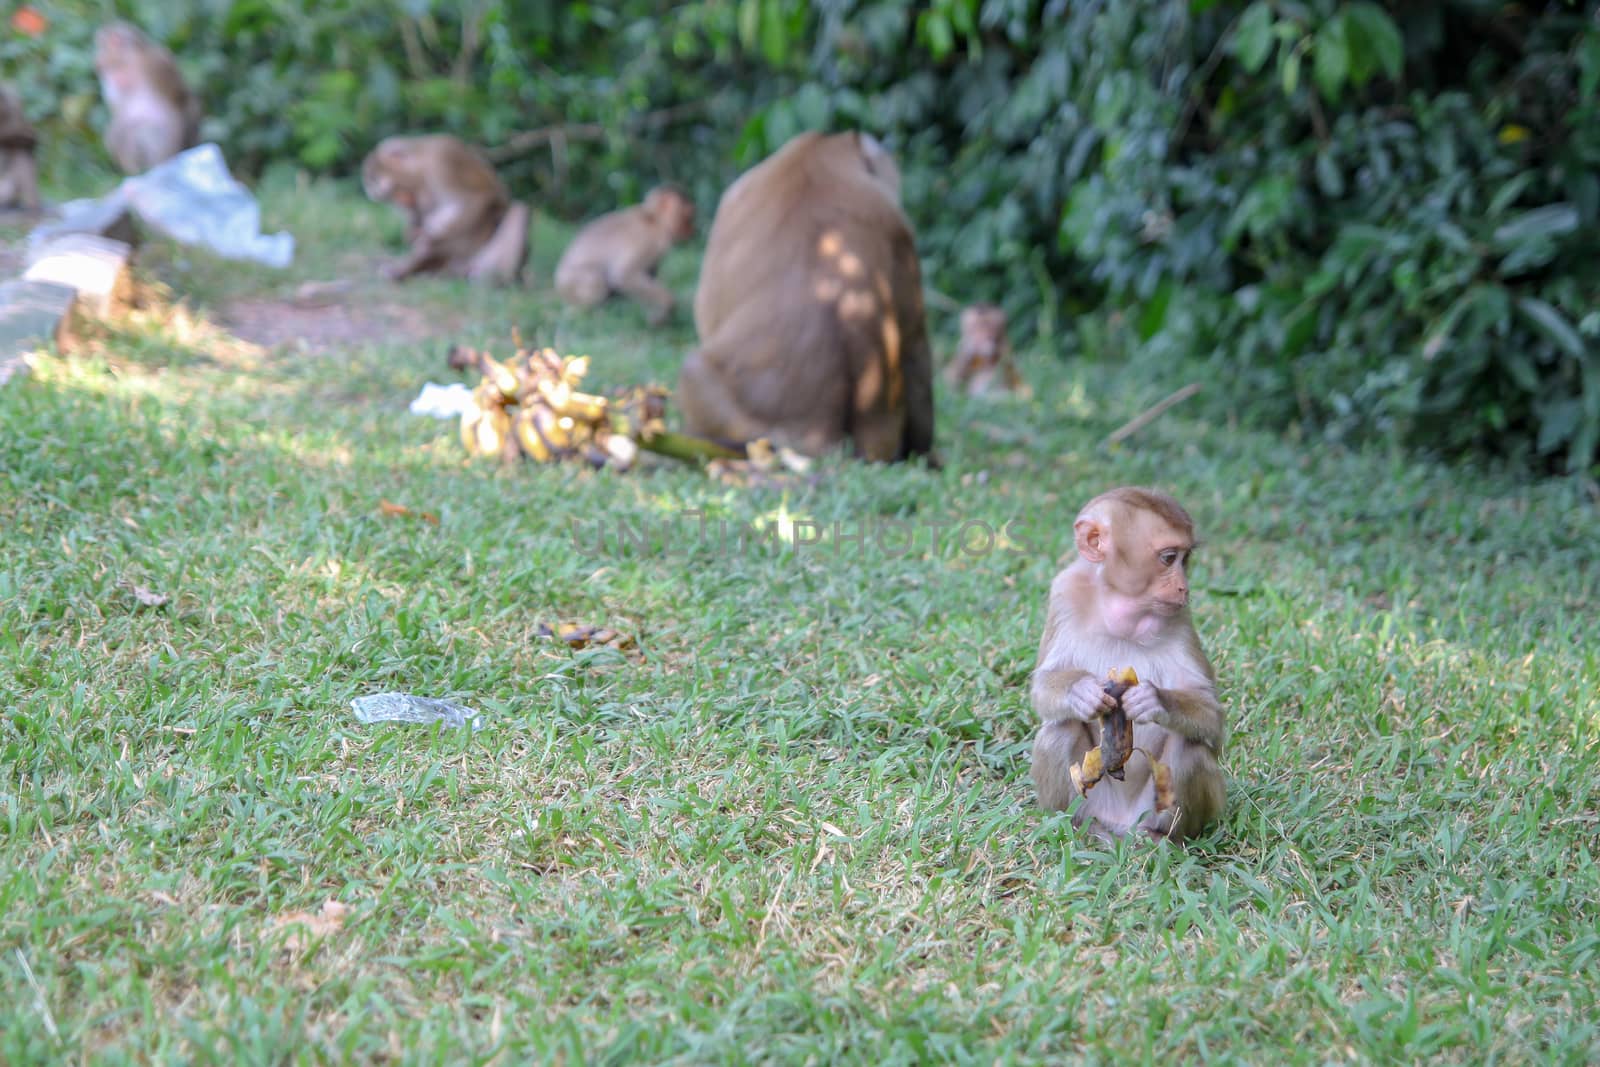 baby monkey eat banana near group by pumppump